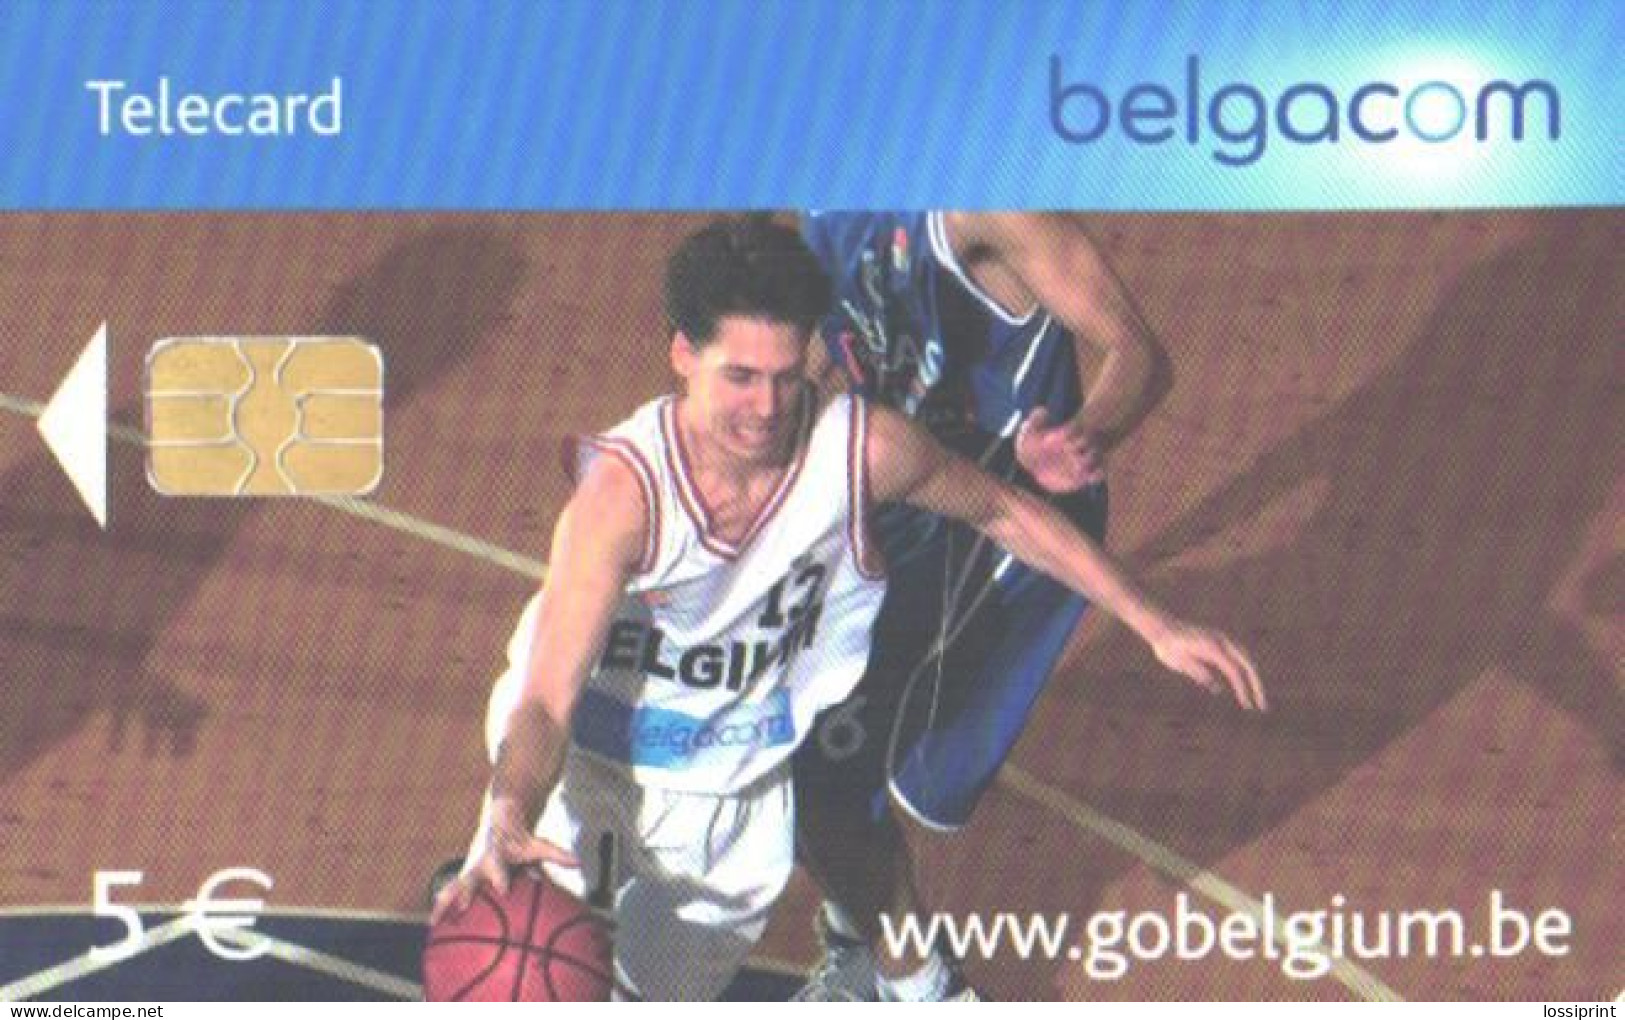 Belgium:Used Phonecard, Belgacom, 5 €, Sport, Basketball, 2006 - Con Chip